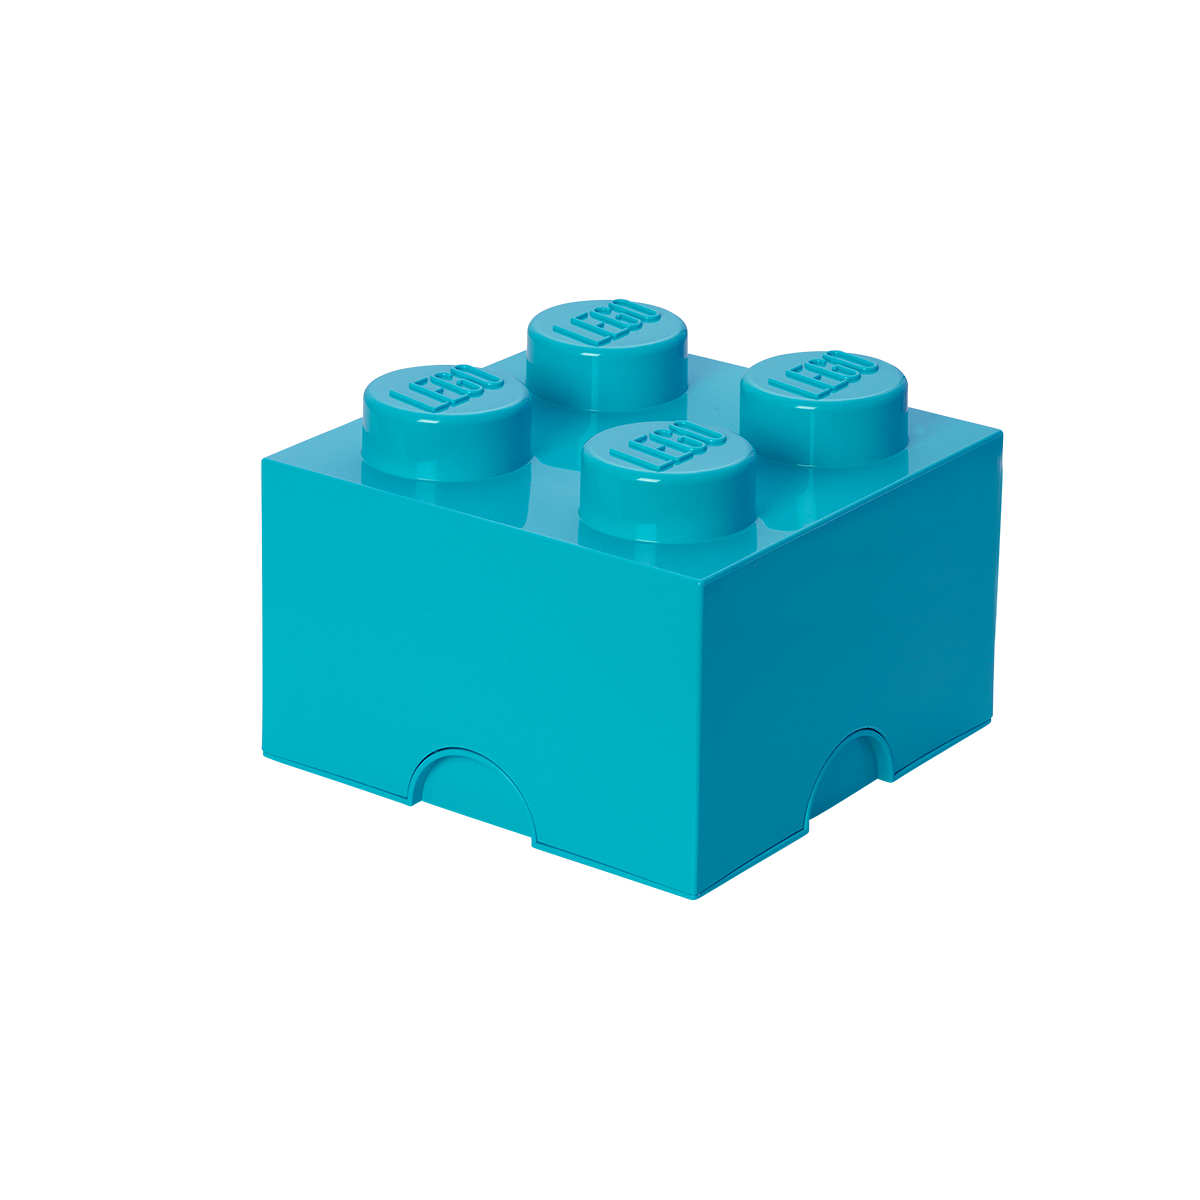 Kutija 4 - azurno plava